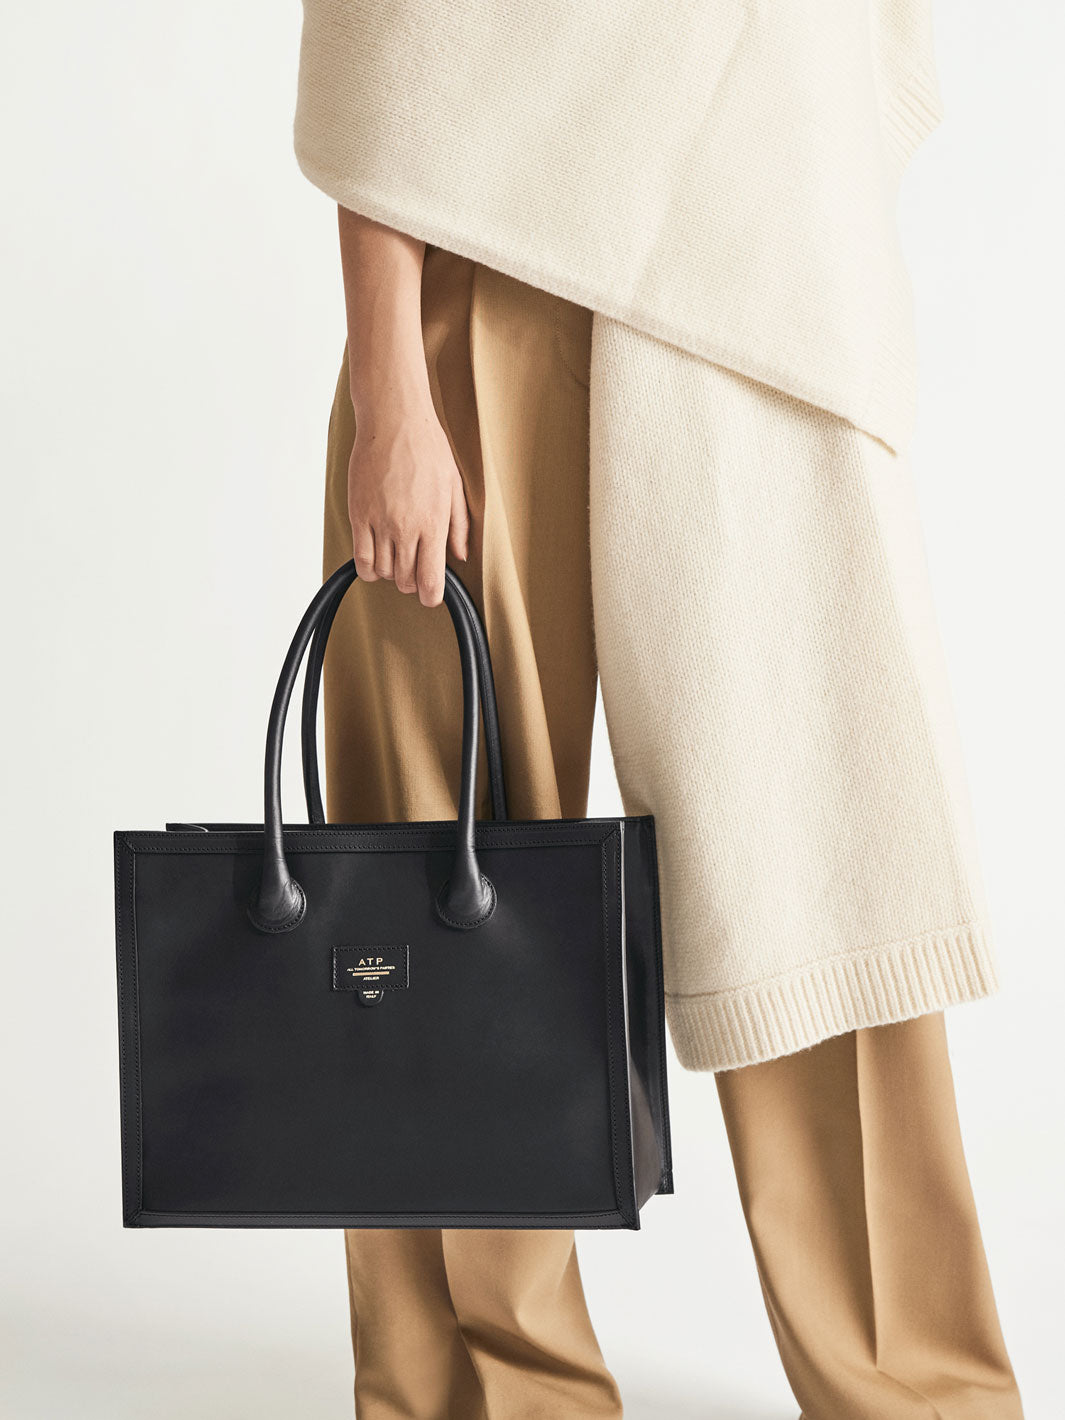 Longchamp Roseau Top Handle Leather Tote Bag Handbag Black Made in France